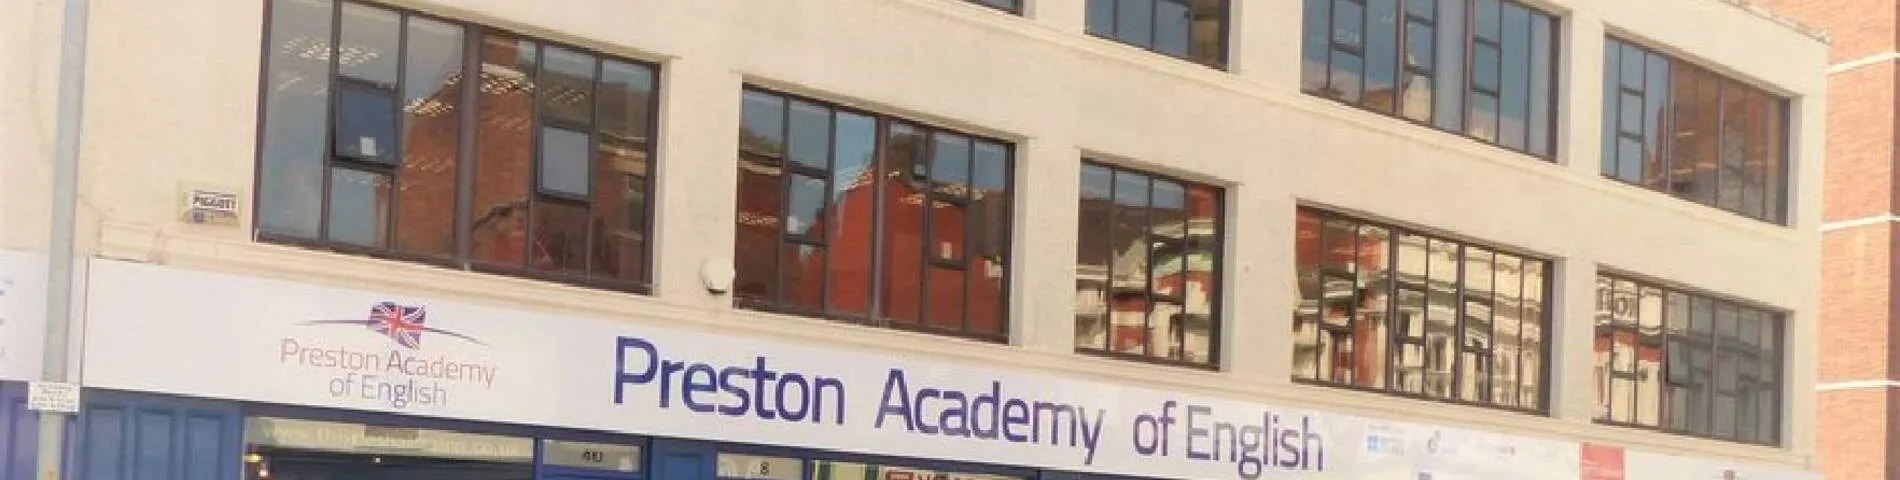 Imatge 1 de l'escola Preston Academy of English